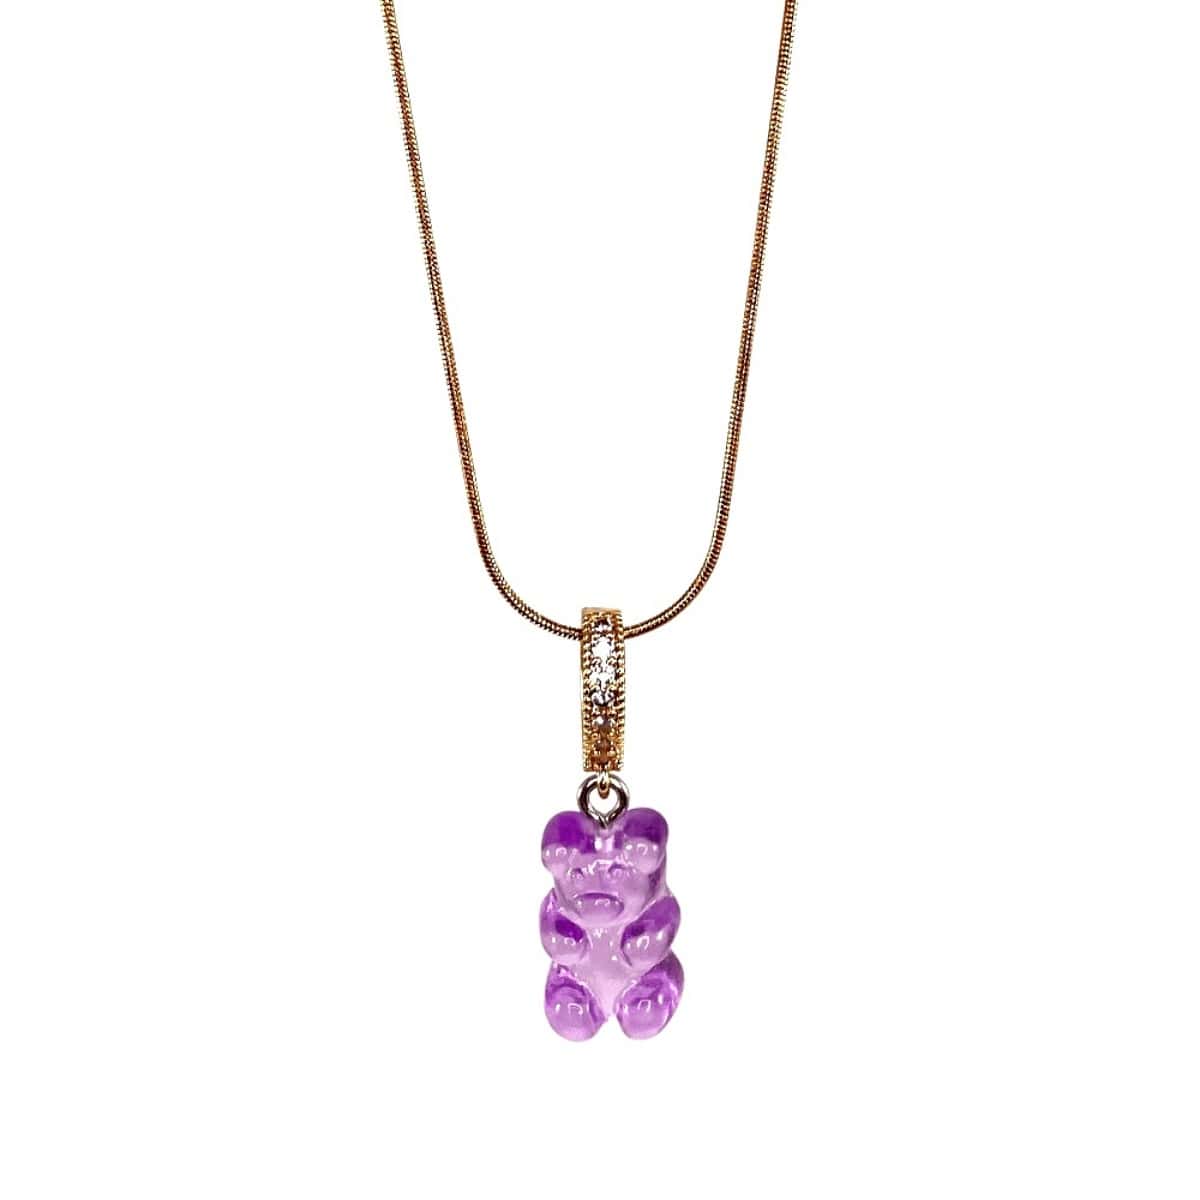 original gummy bear necklace, Purple, gold snake chain - Gummy Bear Bling